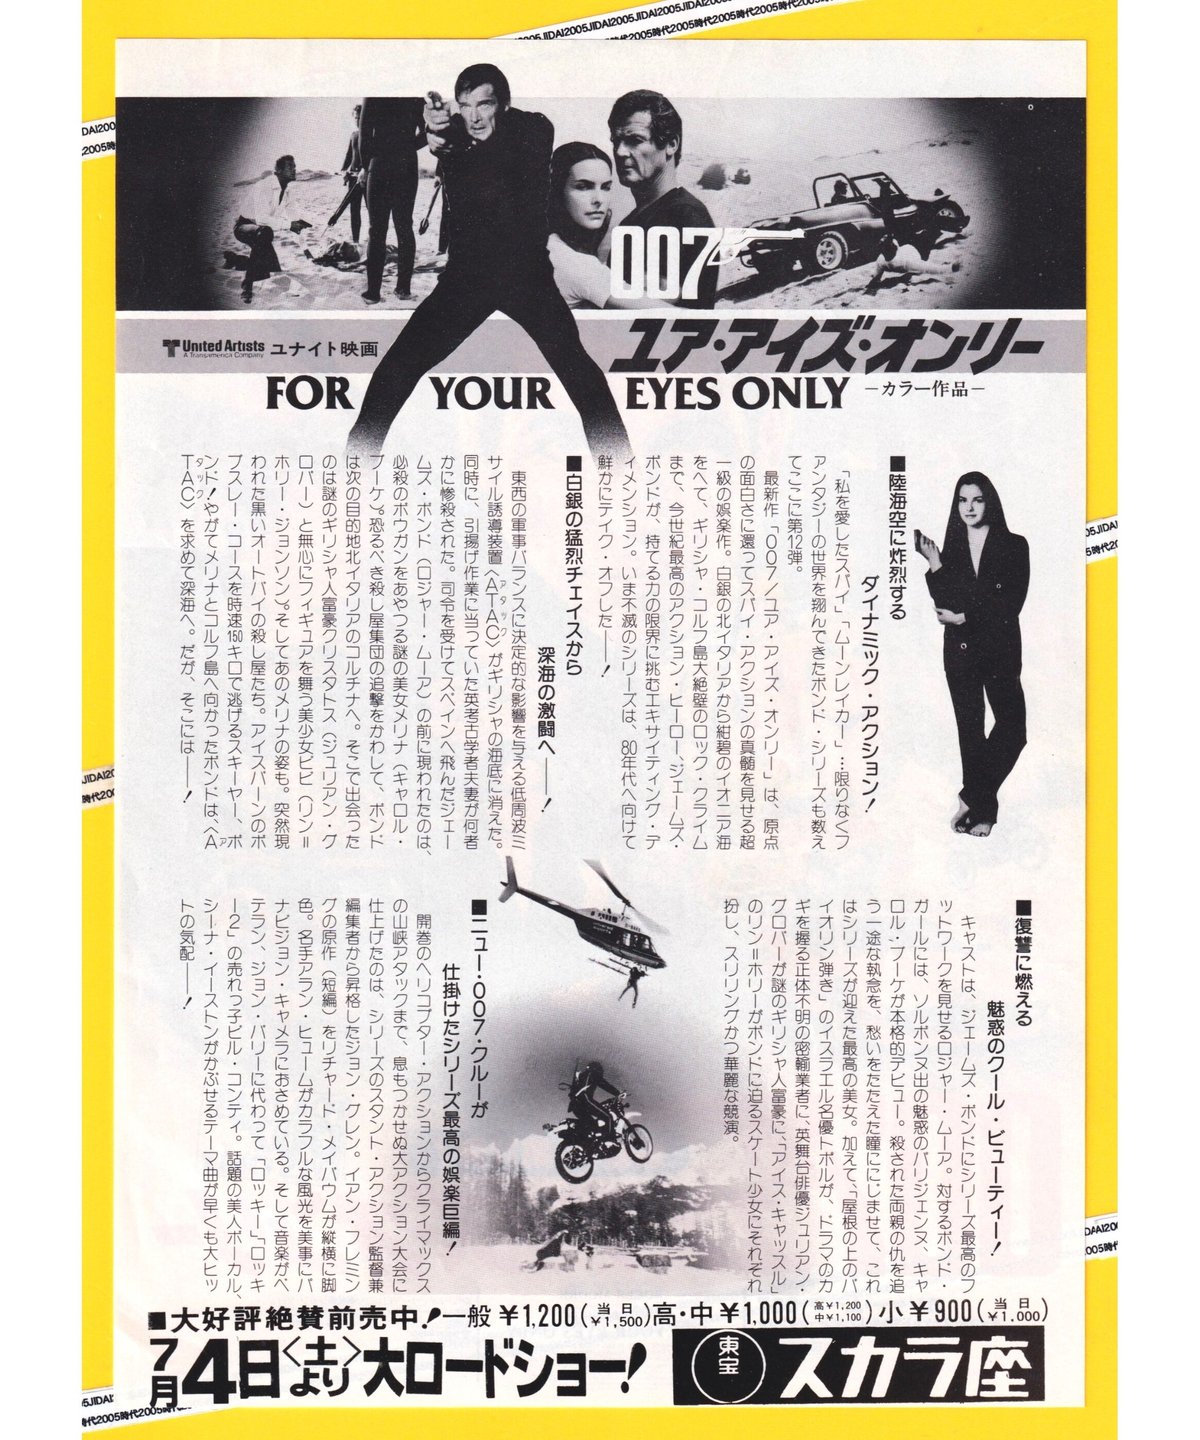 2B) 007／ユア・アイズ・オンリー［第12弾］欧文題名明朝系 映画チラシ・フライヤー...